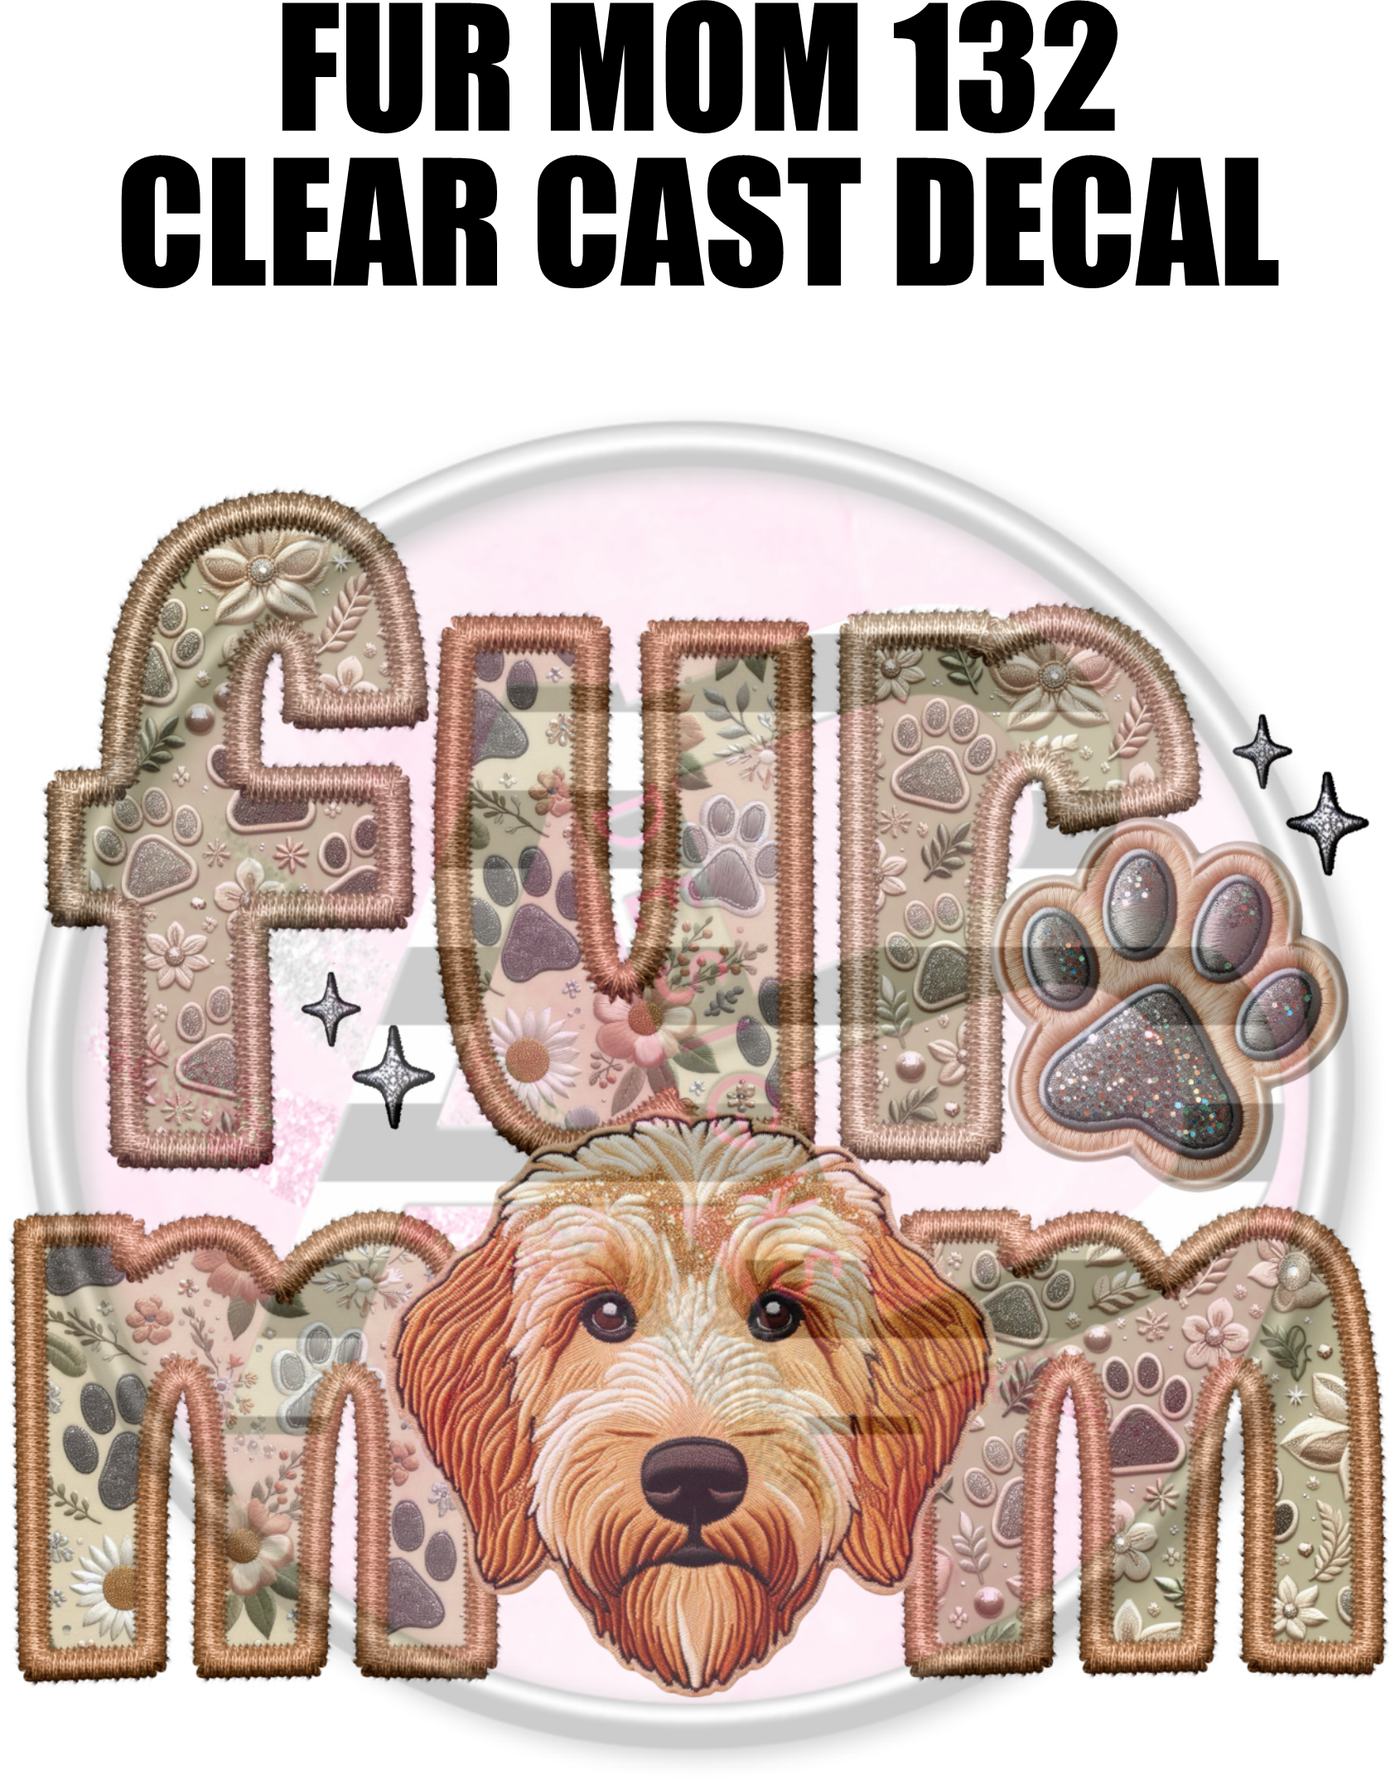 Fur Mom 132 - Clear Cast Decal